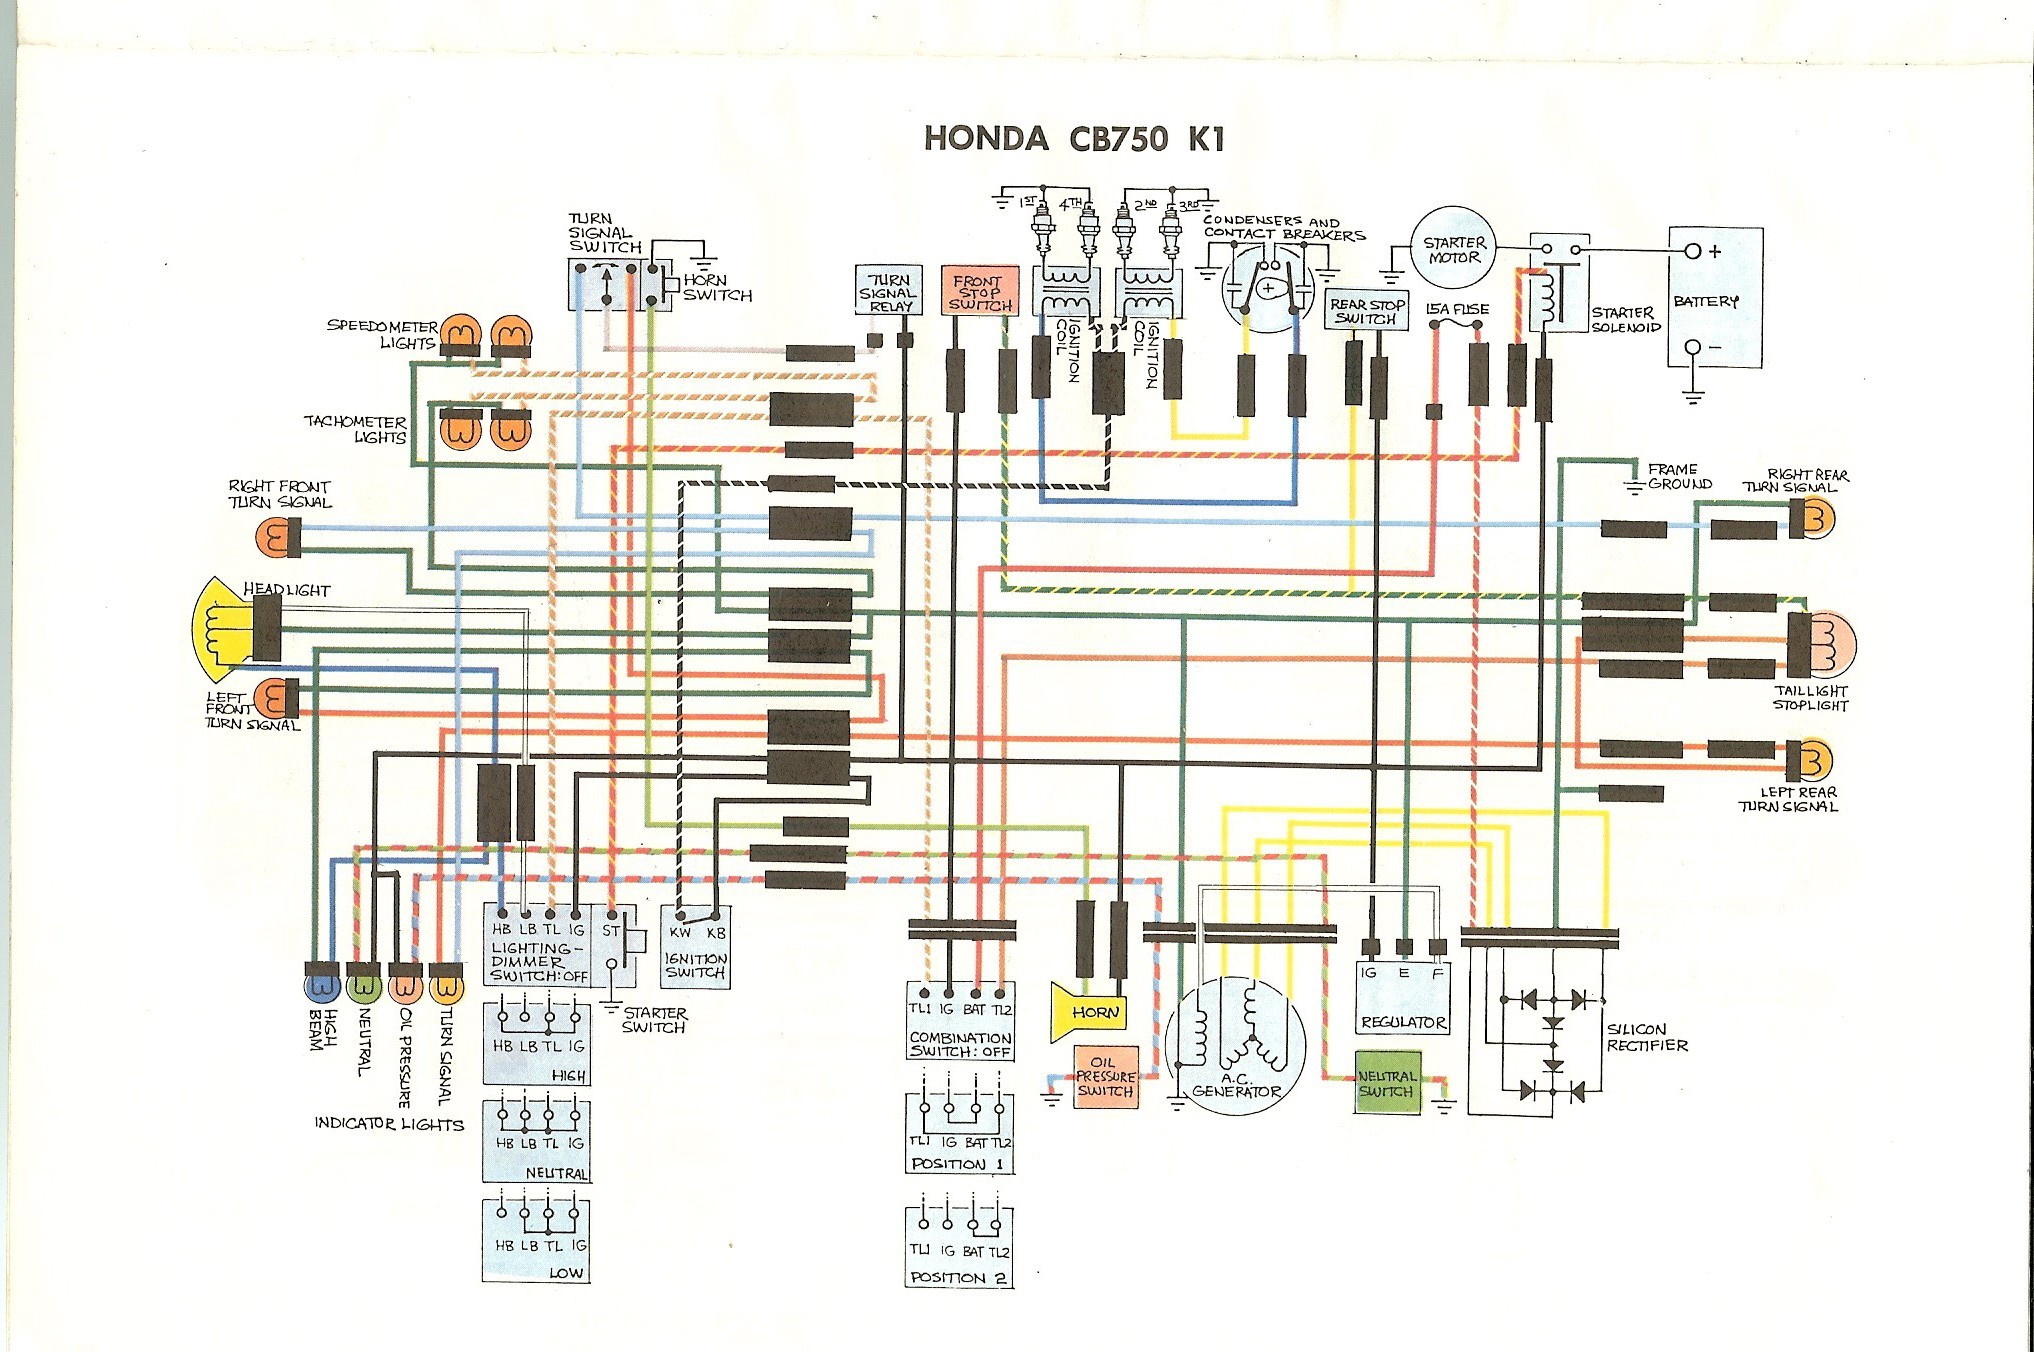 1981 honda c70 passport wiring diagram valid awesome 1980 honda cb750 wiring diagram elaboration electrical of 1981 honda c70 passport wiring diagram